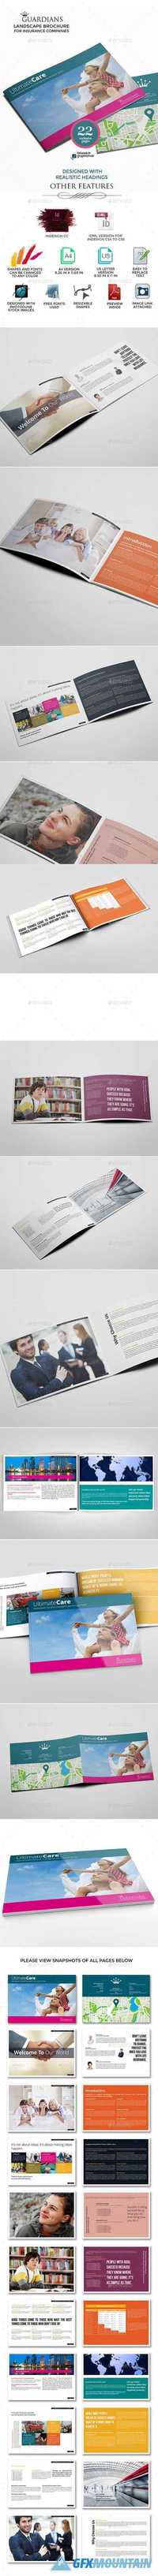 Landscape Brochure for Insurance Companies 9699533